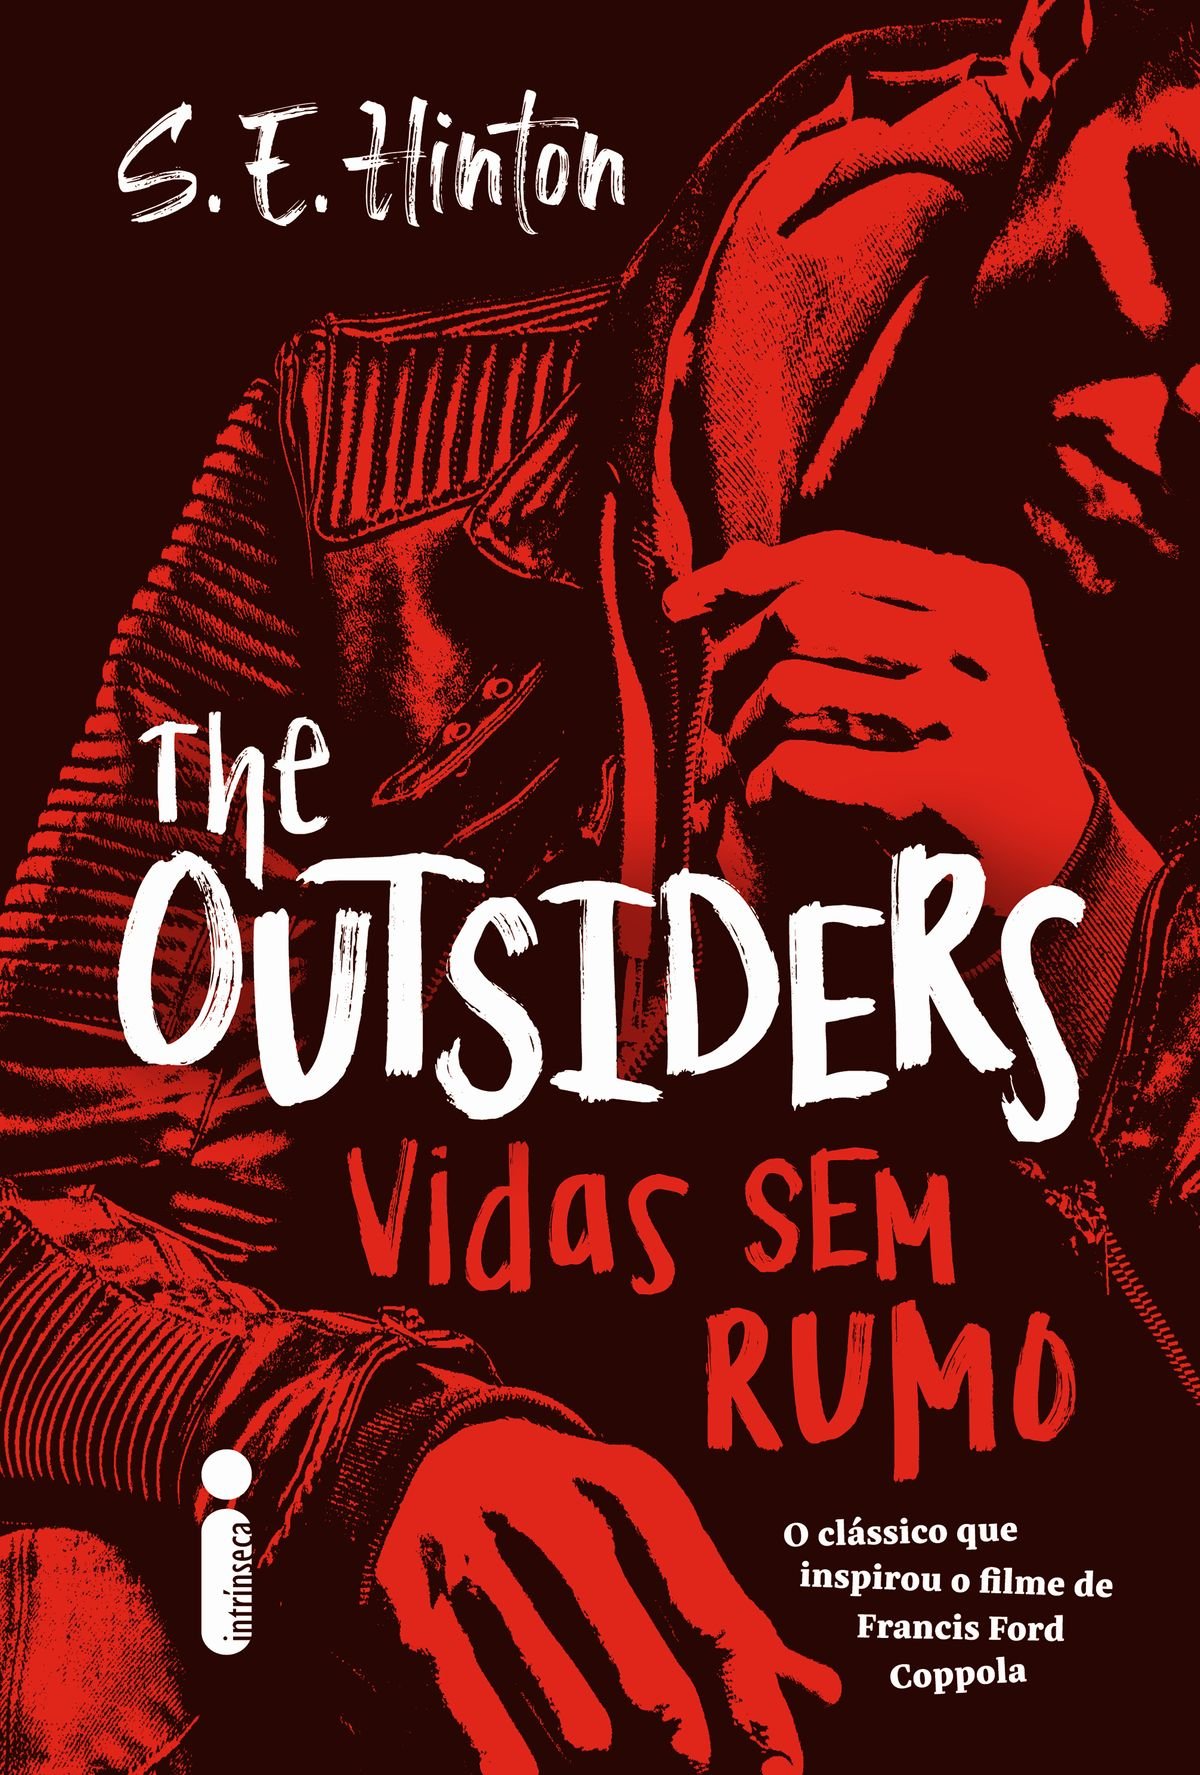 Capa do livro 'The Outsiders - Vidas Sem Rumo'.